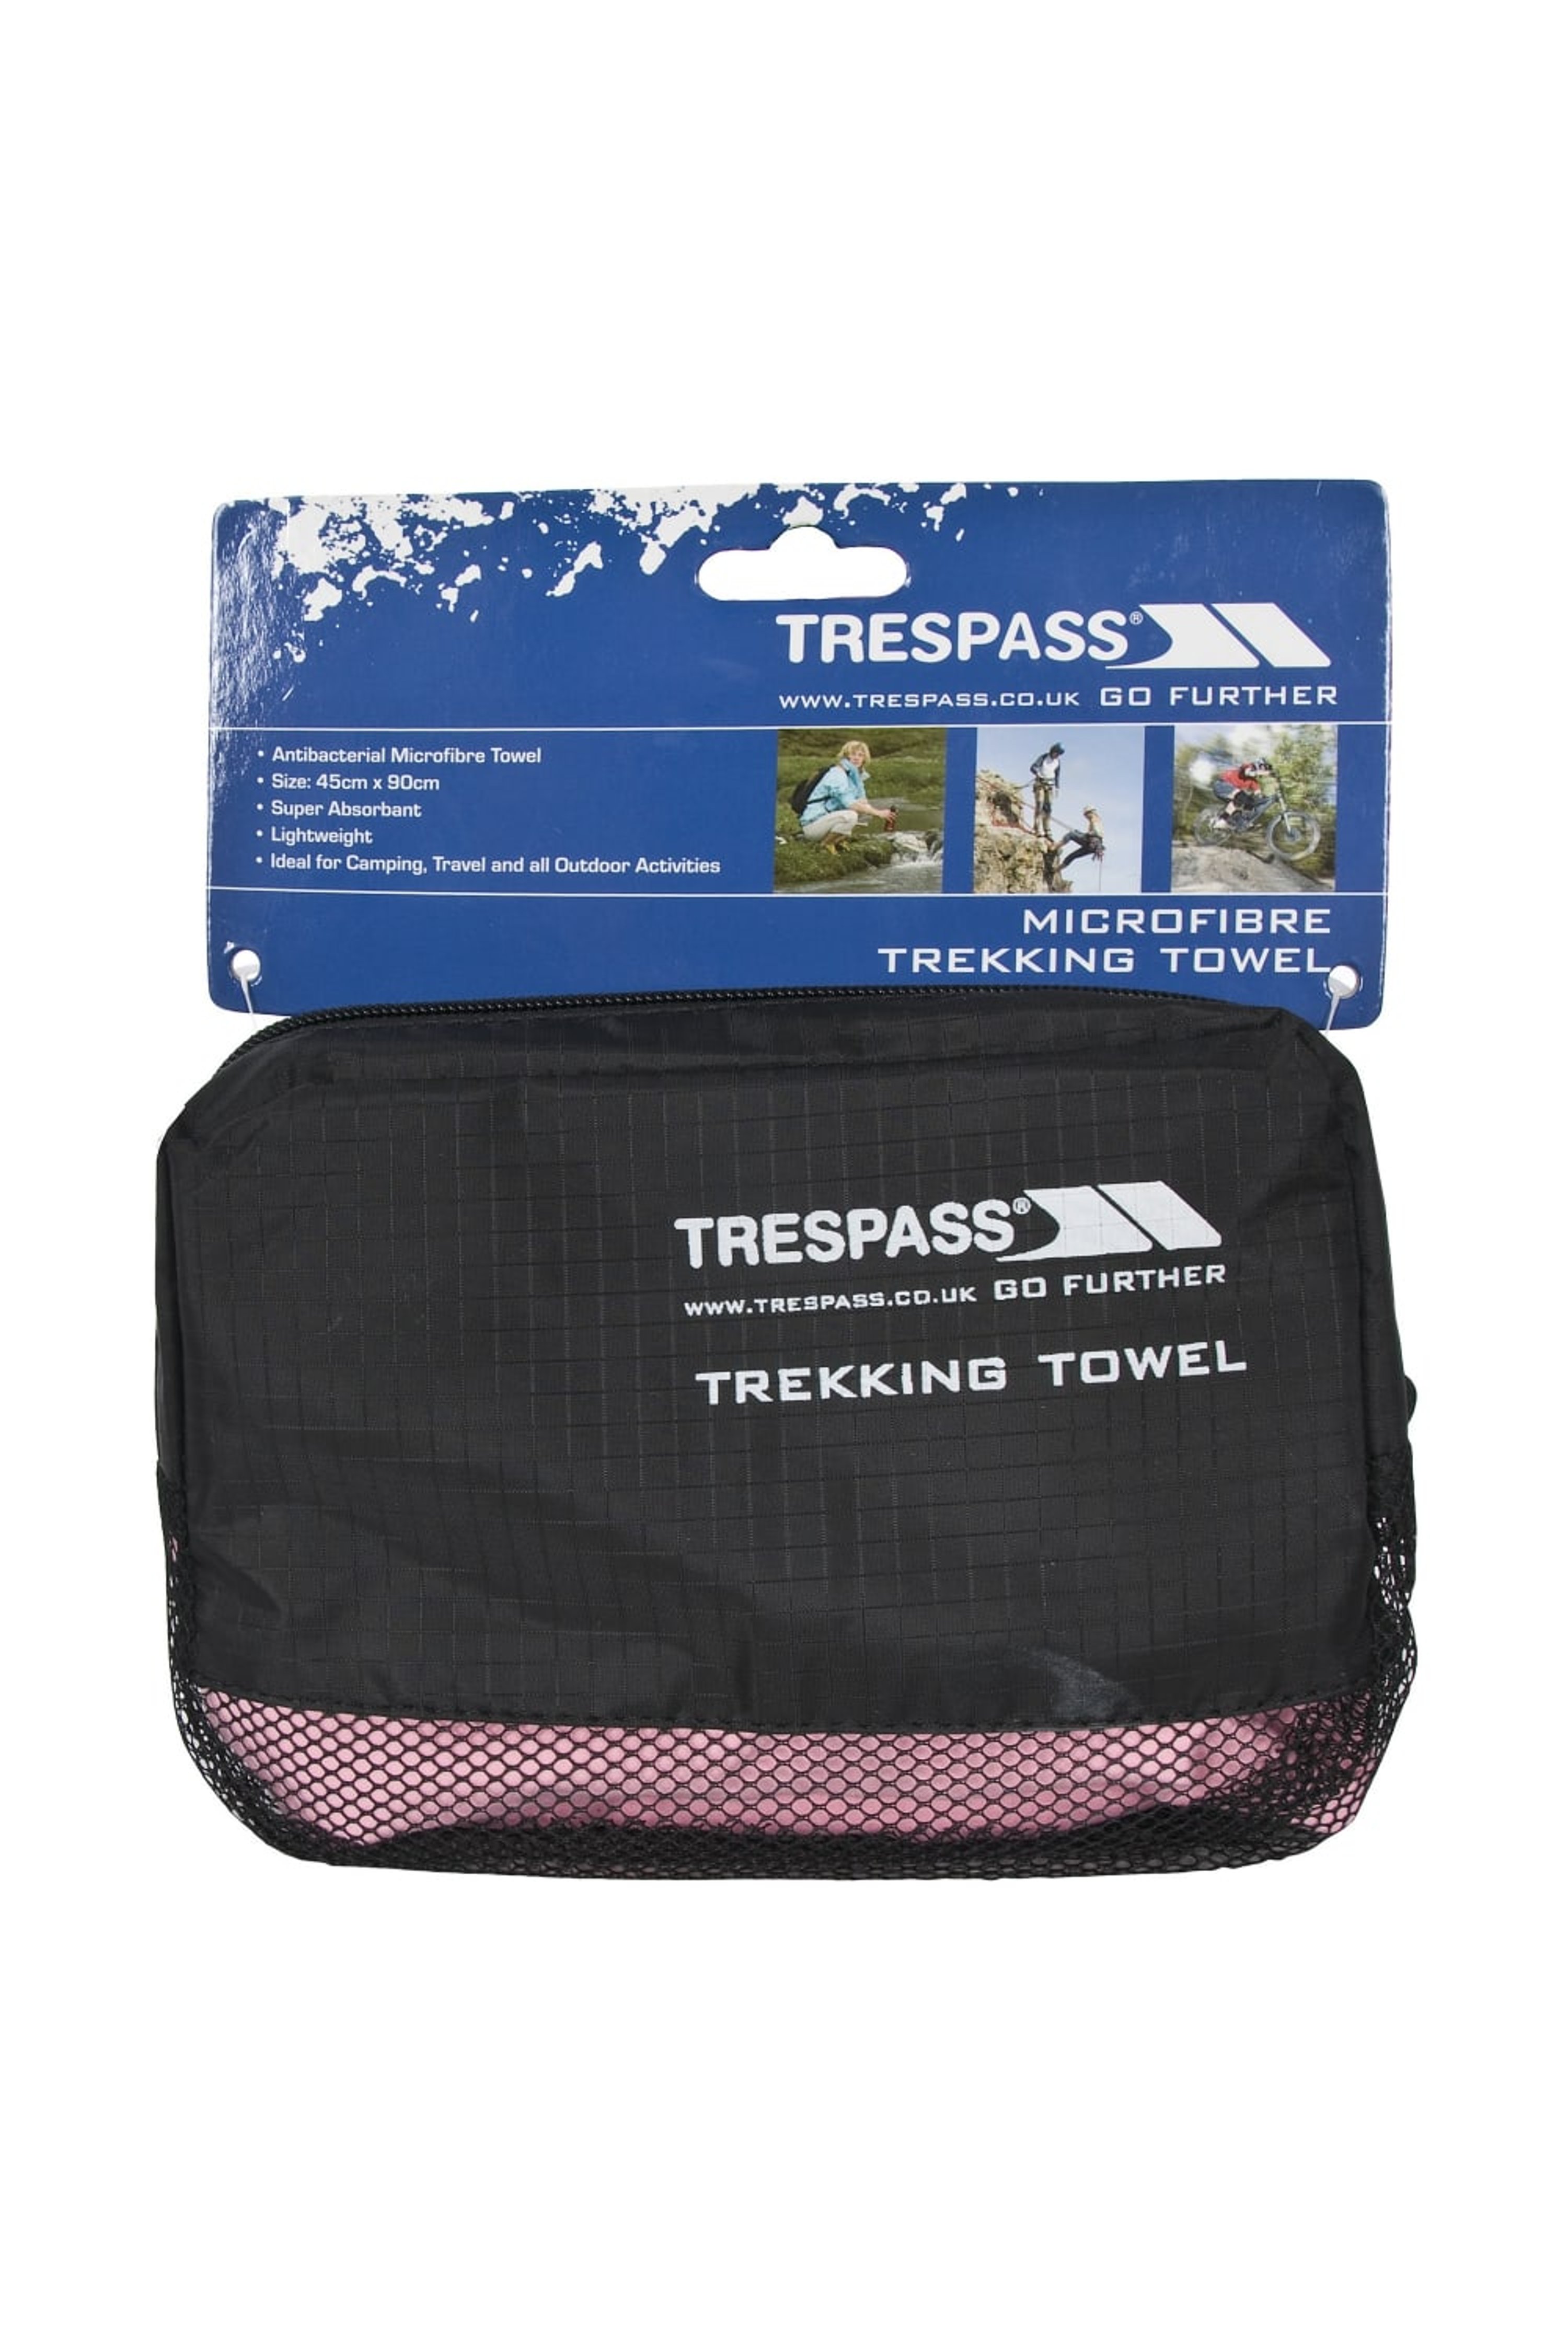 TRESPASS TRESPASS TRESPASS SOAKED ANTI-BACTERIAL SPORTS TOWEL (PINK) (ONE SIZE)